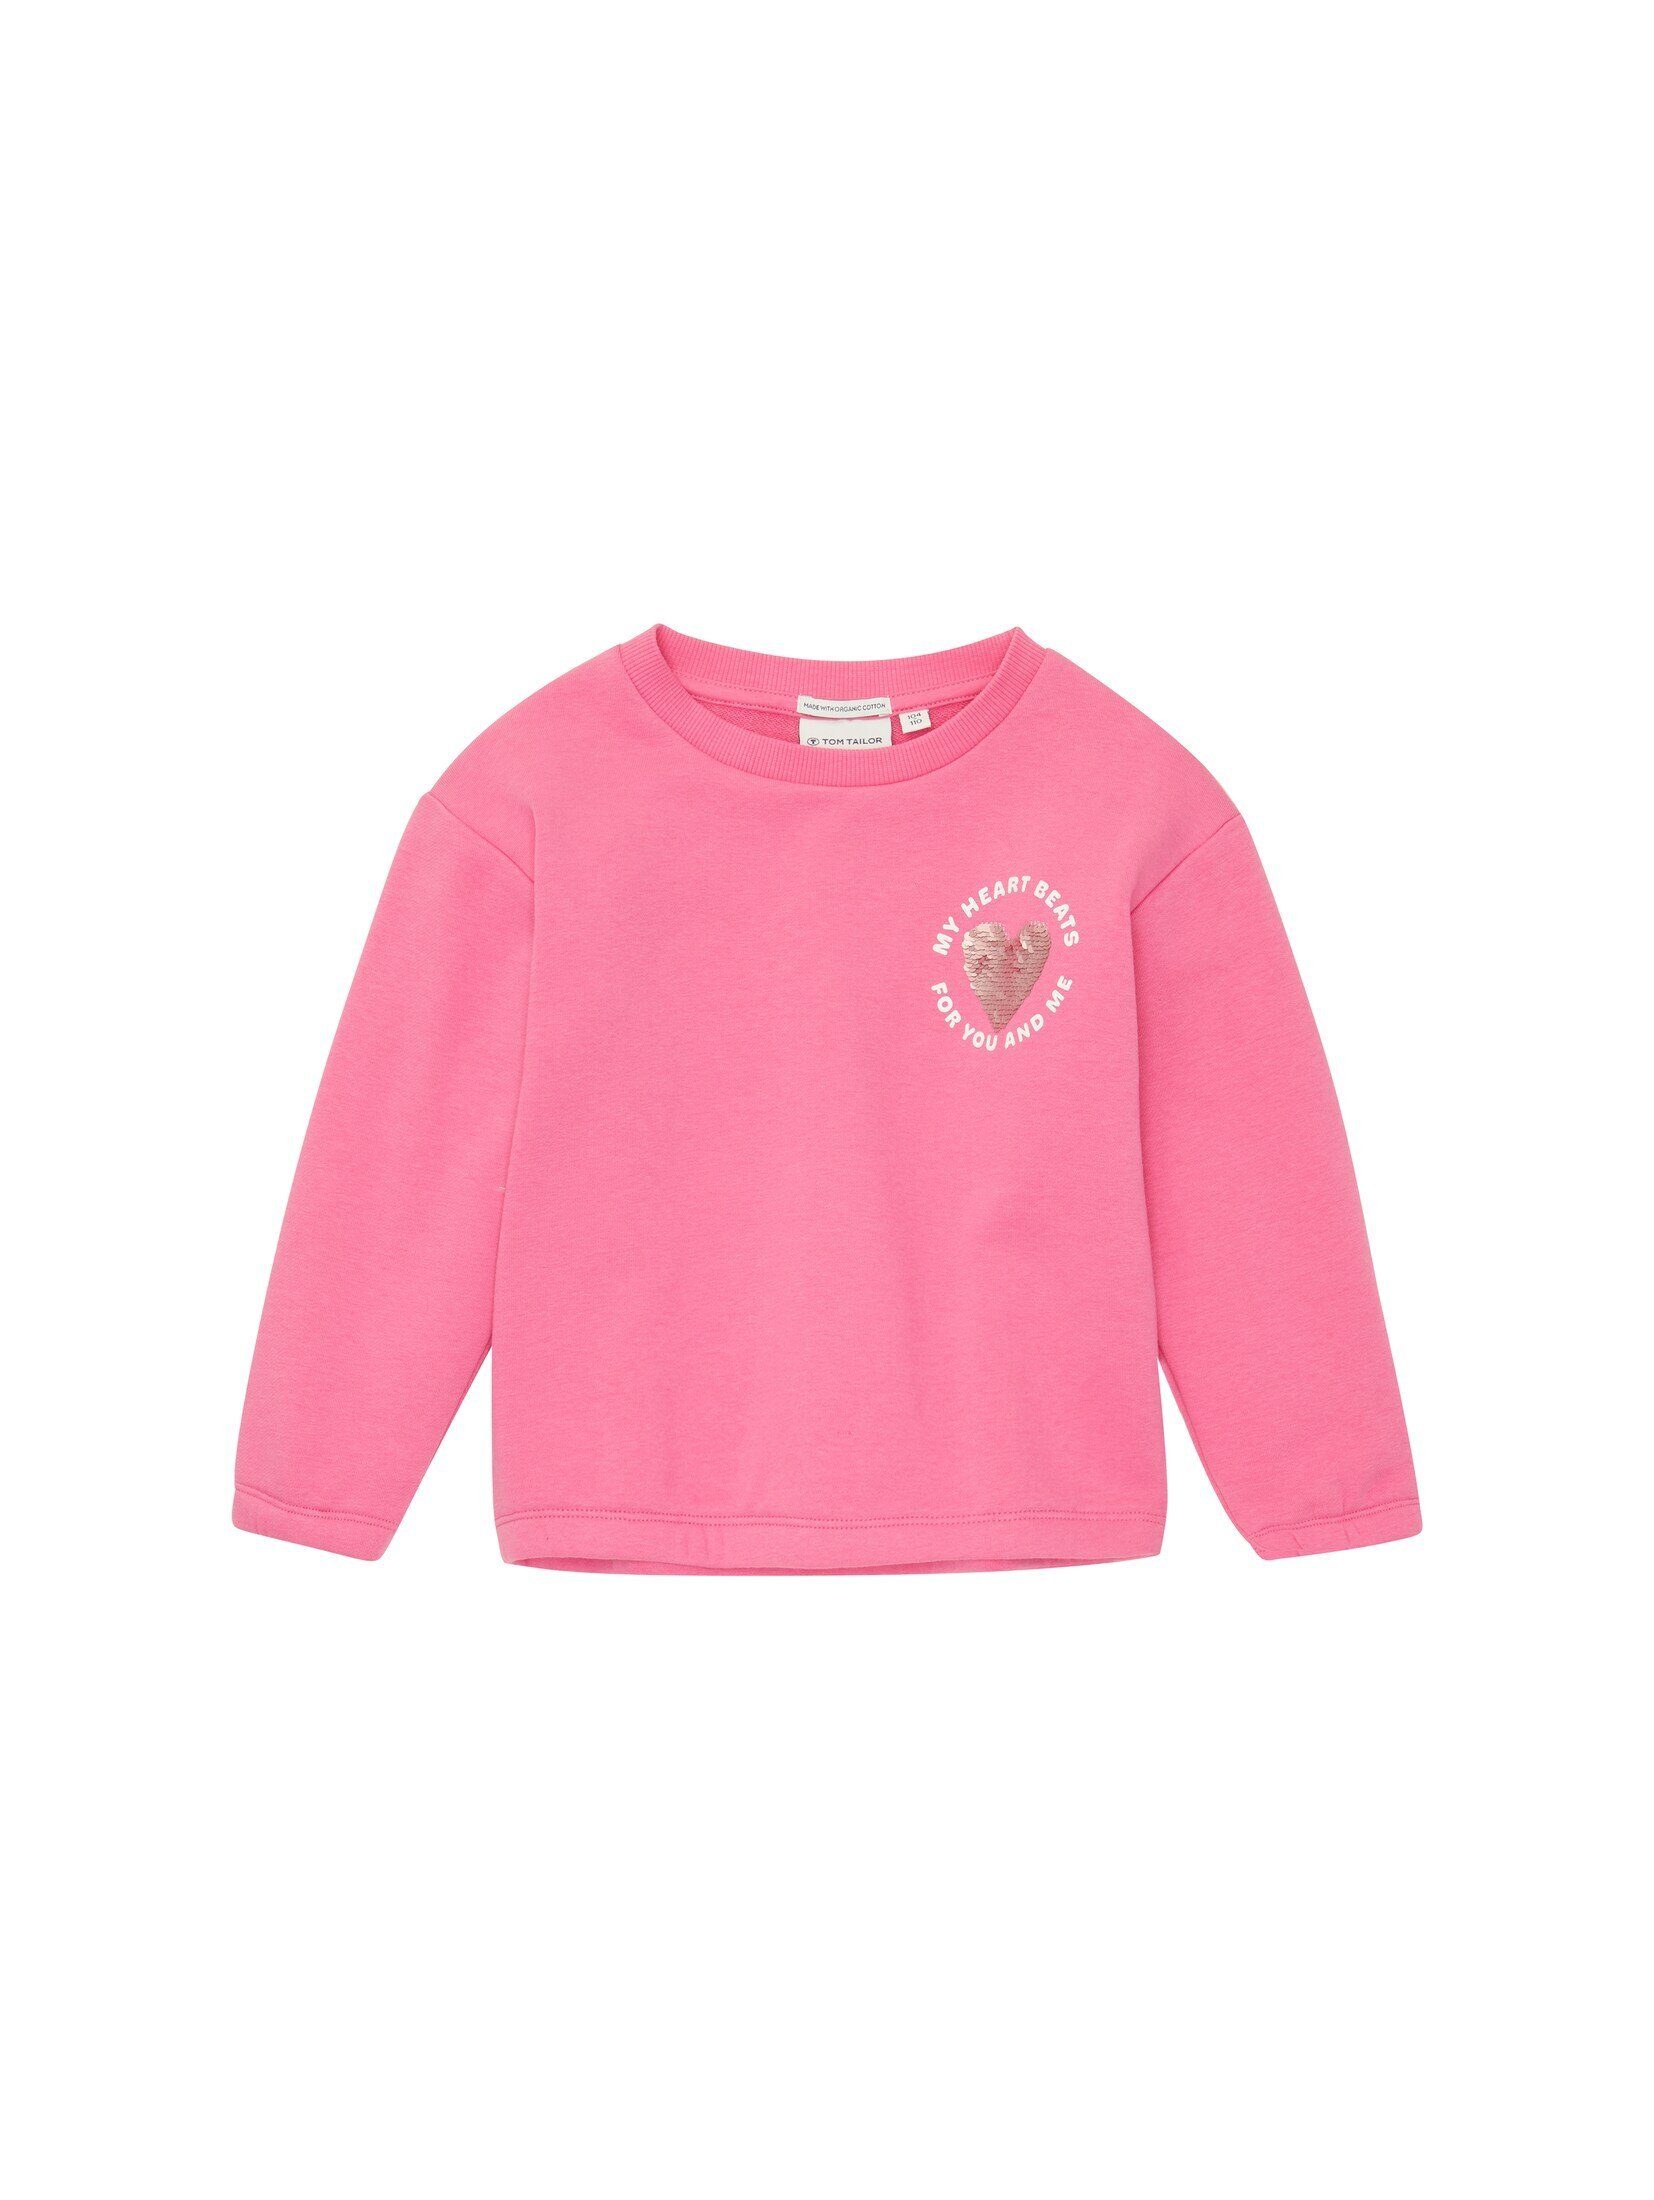 TOM TAILOR Sweatjacke Sweatshirt mit carmine Artwork pink